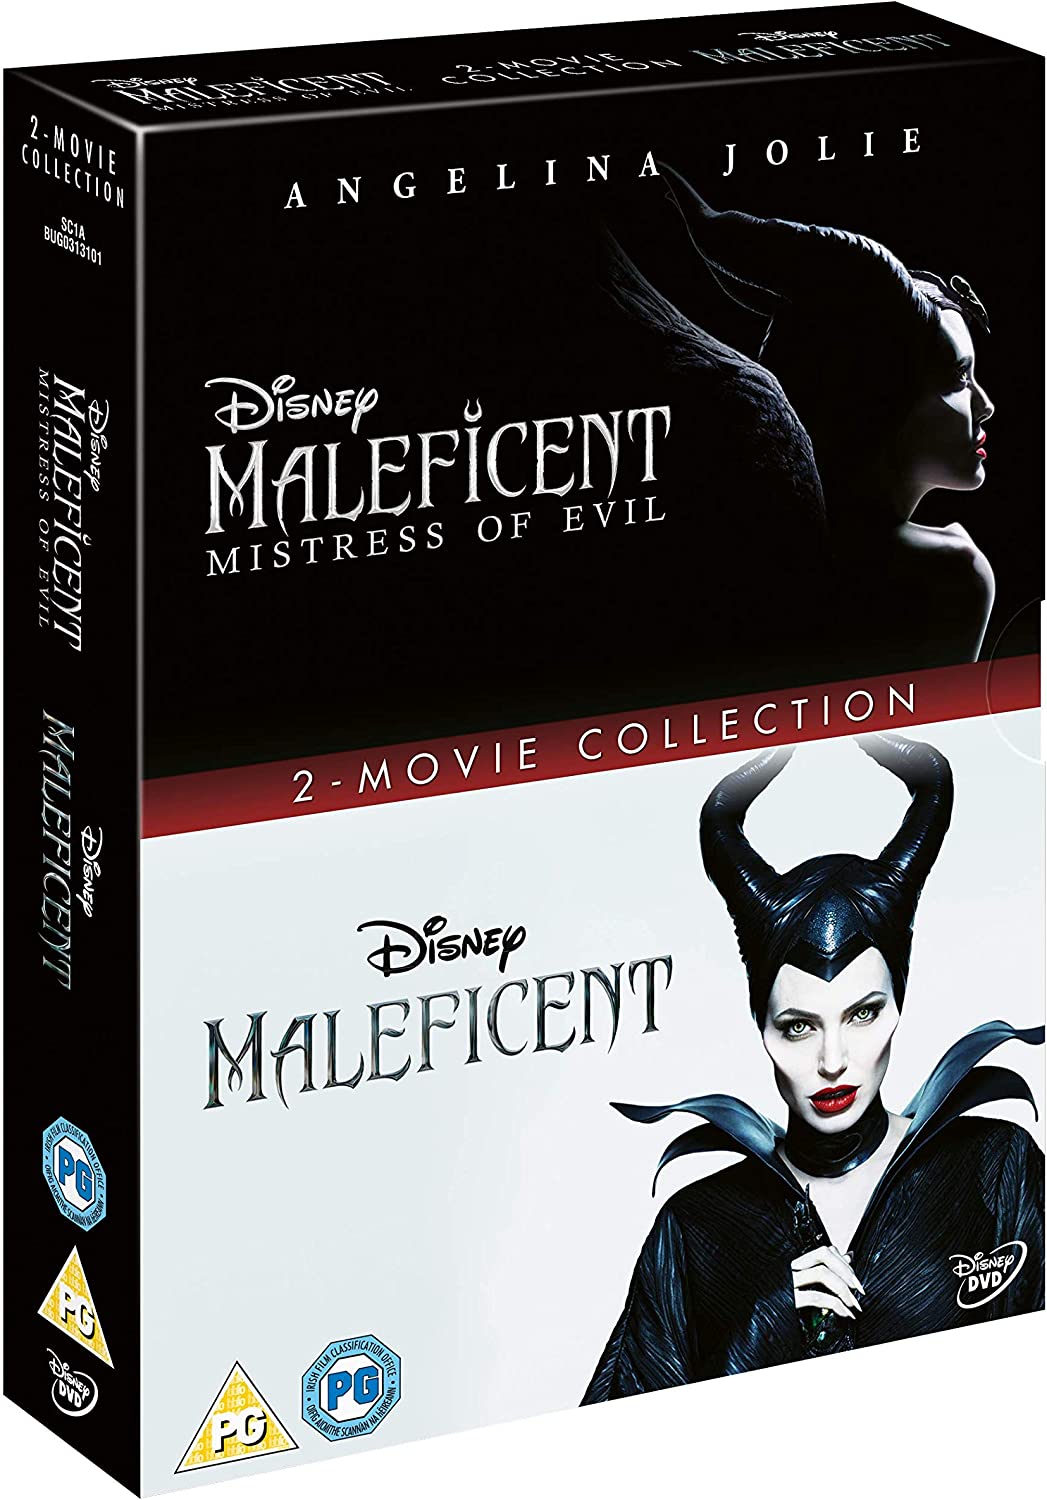 Disney's Maleficent Doublepack [DVD ]